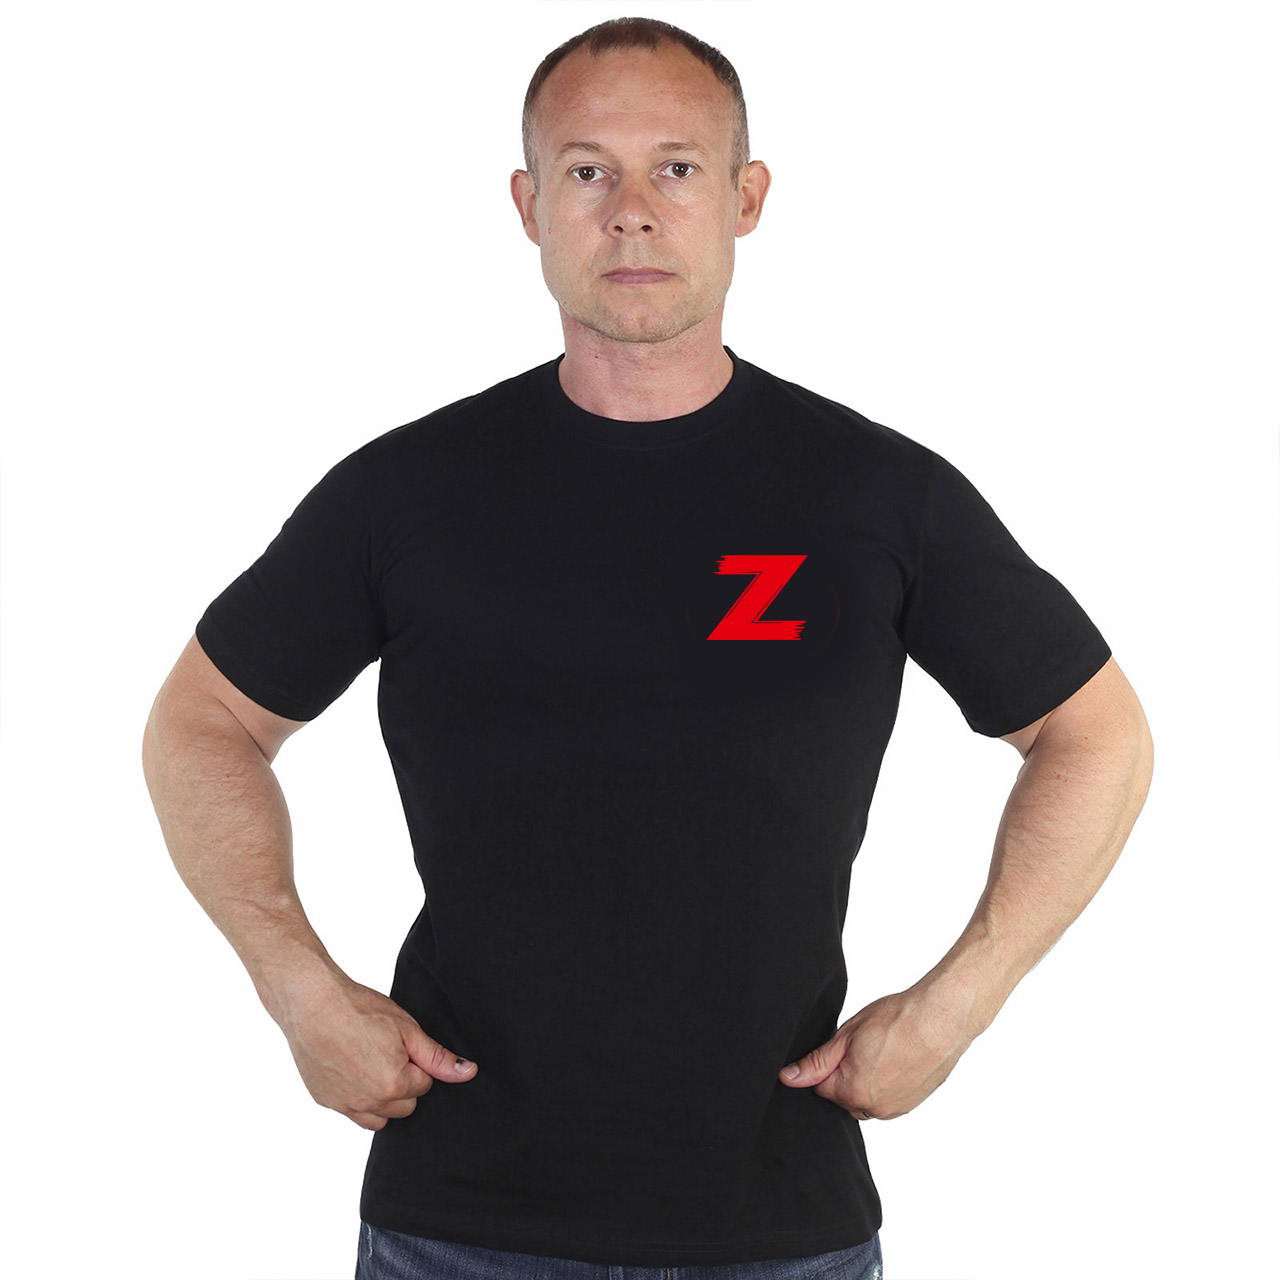 Недорогие подарки мужчинам – футболка Z